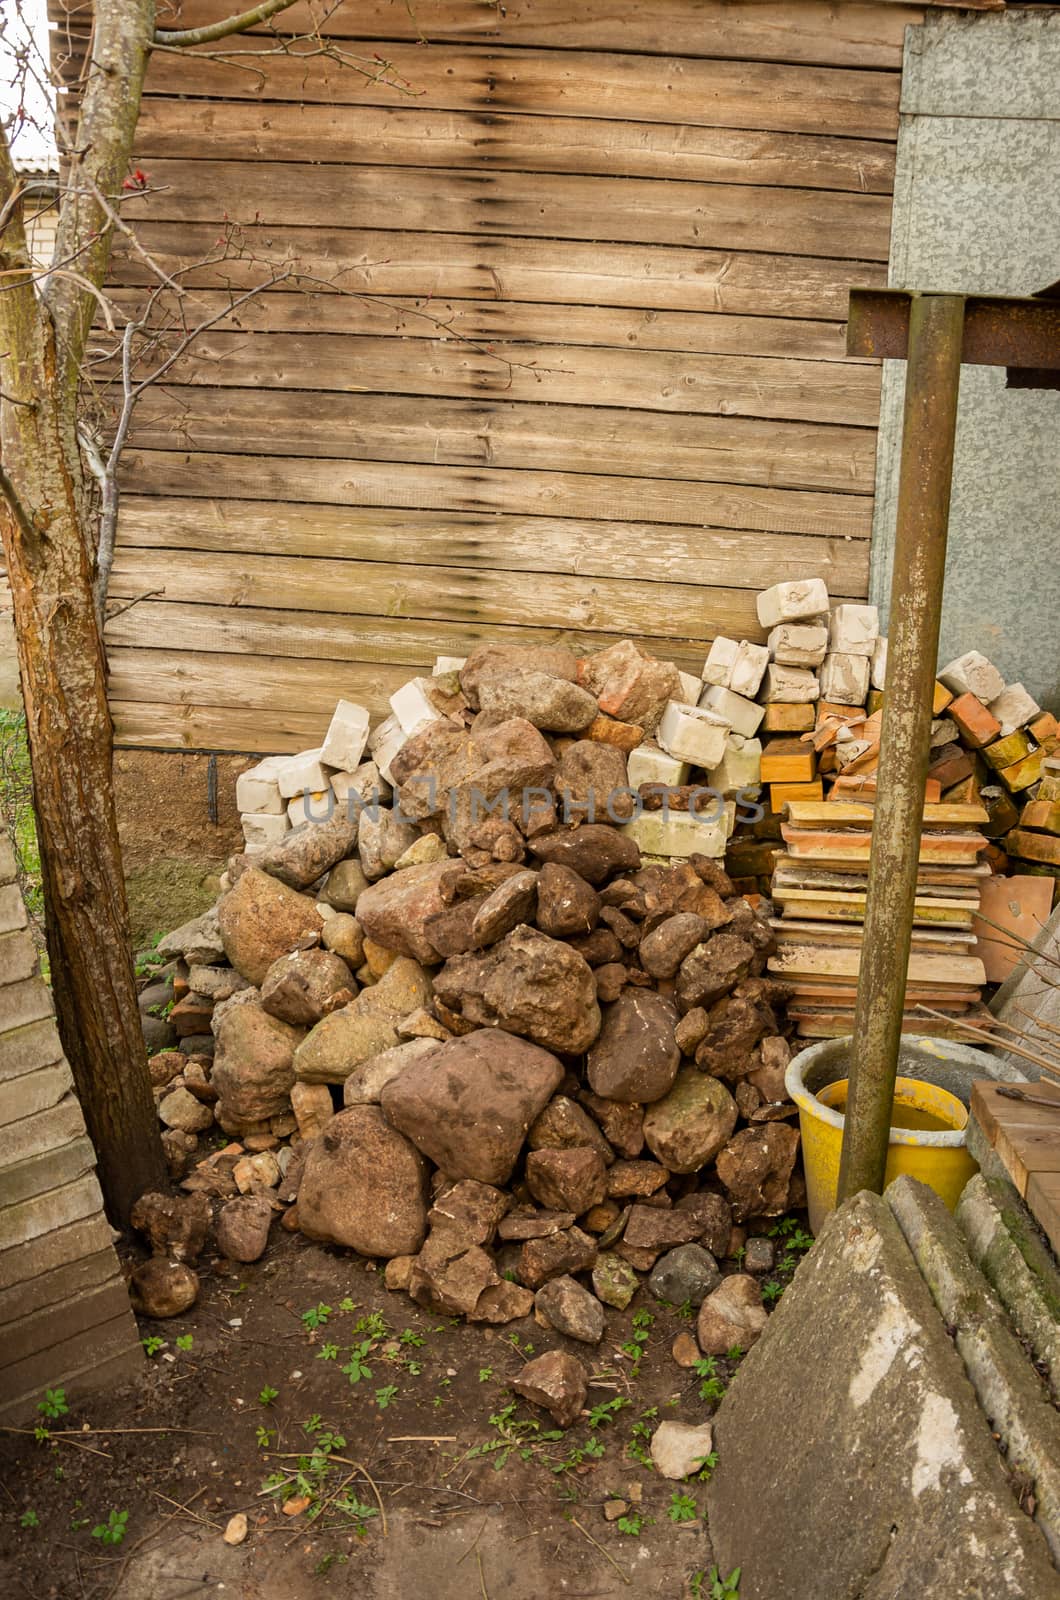 Stack of stones, various garden things by Oskars